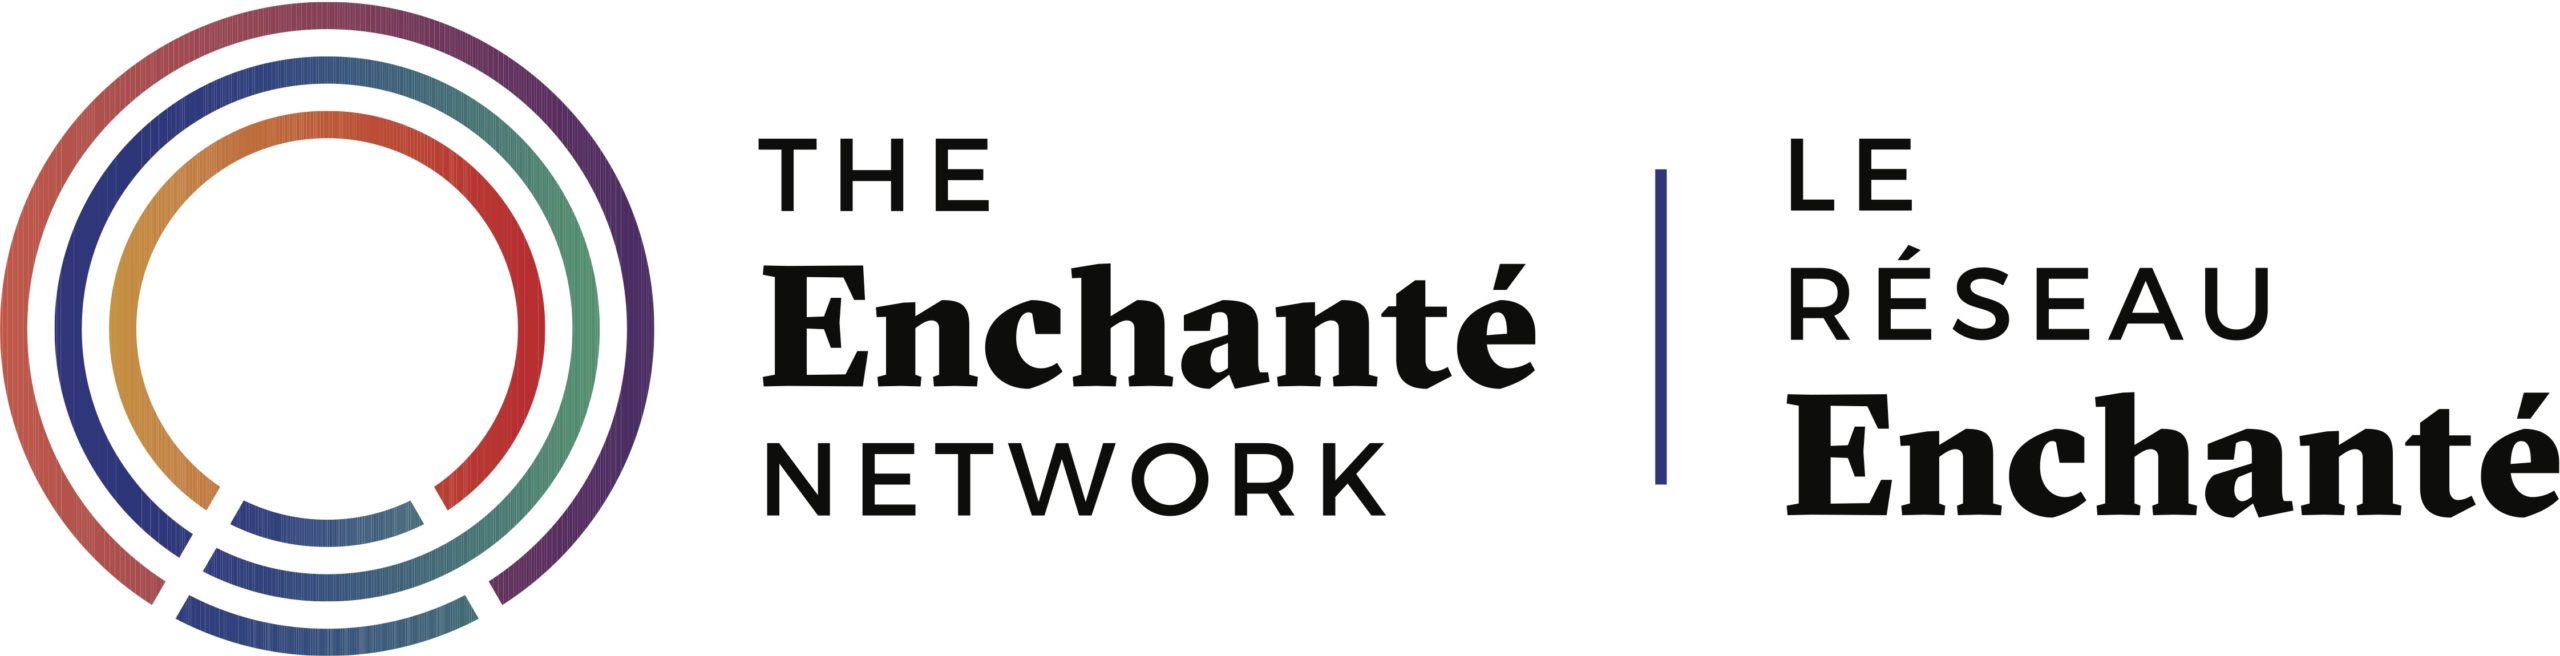 Echante Network